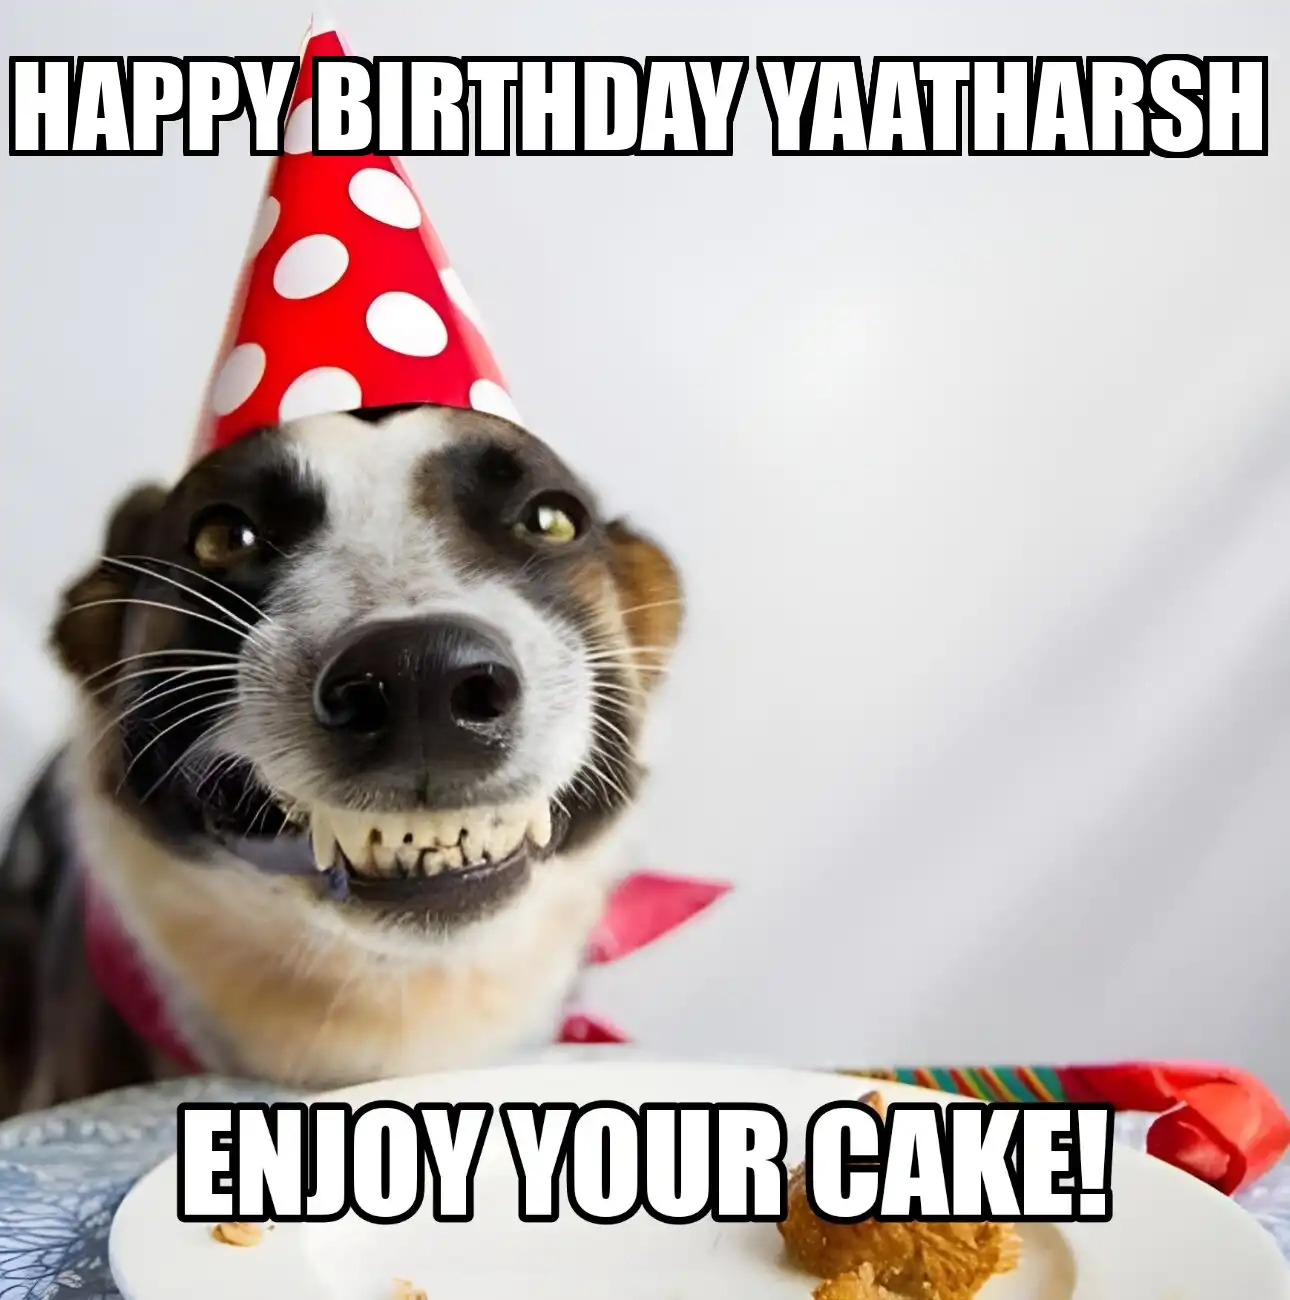 Happy Birthday Yaatharsh Enjoy Your Cake Dog Meme